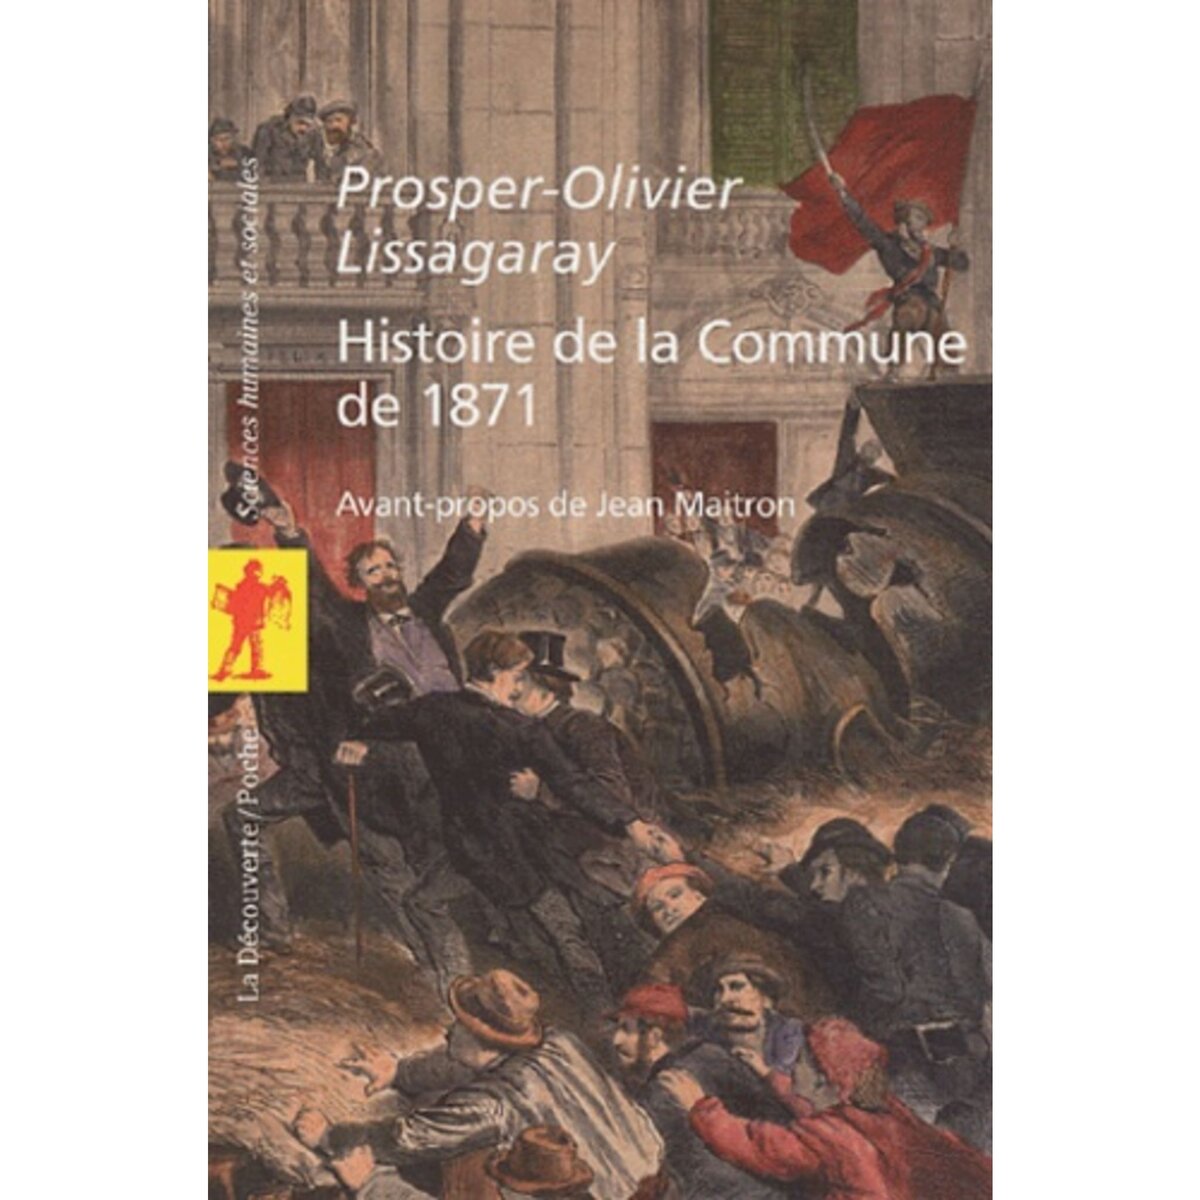  HISTOIRE DE LA COMMUNE DE 1871, Lissagaray Prosper-Olivier